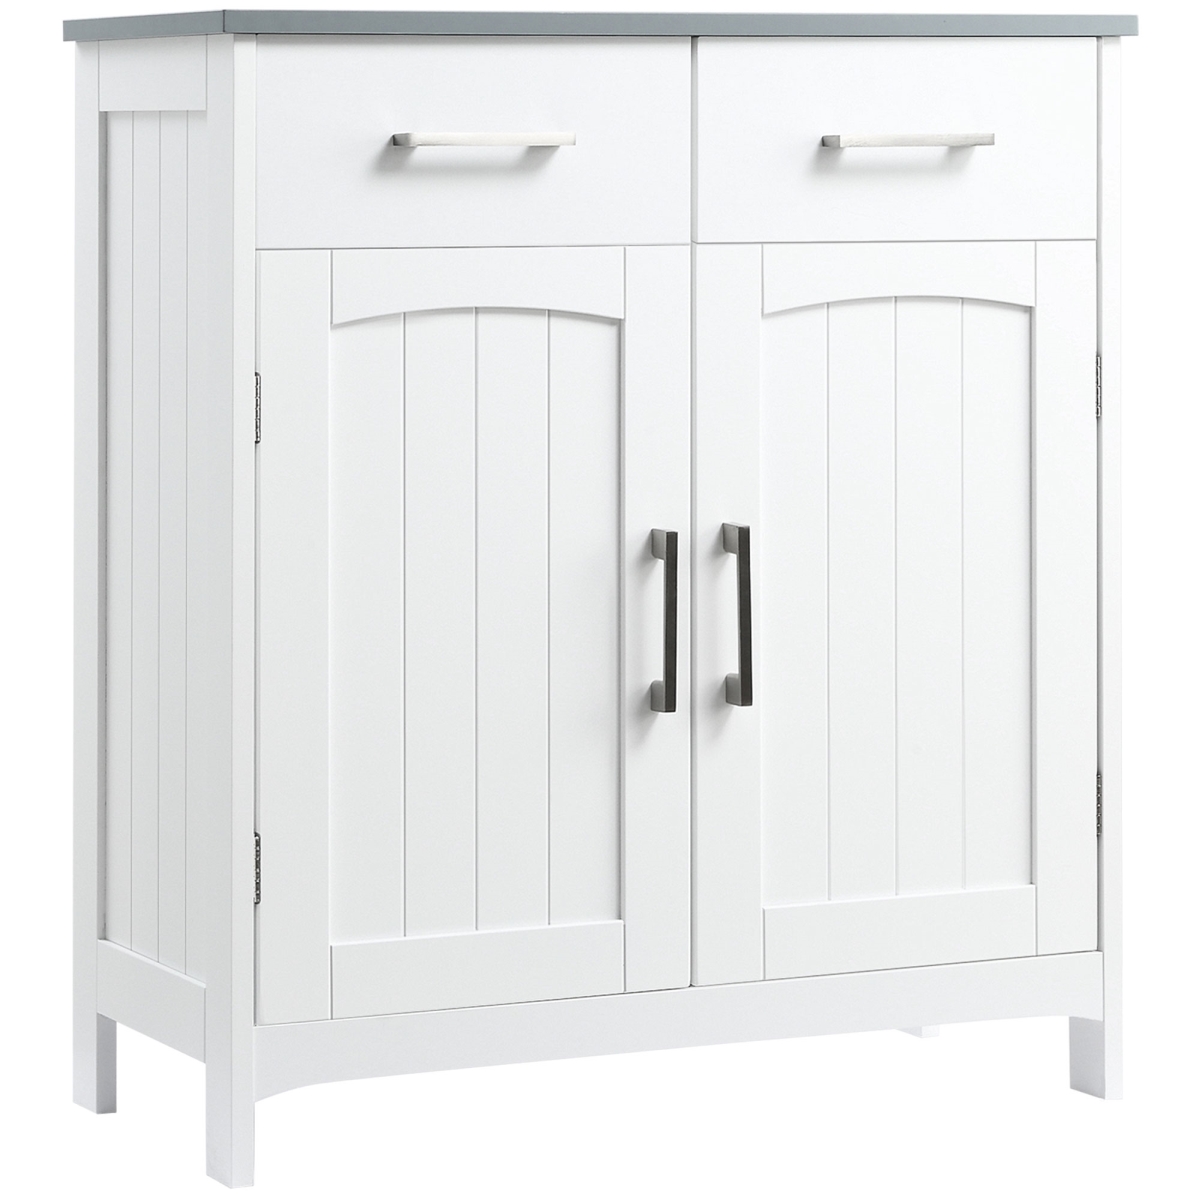 Picture of 212 Main 834-360 kleankin Bathroom Floor Cabinet&#44; Freestanding Linen Cabinet&#44; Storage Cupboard with 2 Drawers&#44; Double Doors & Adjustable Shelf&#44; White